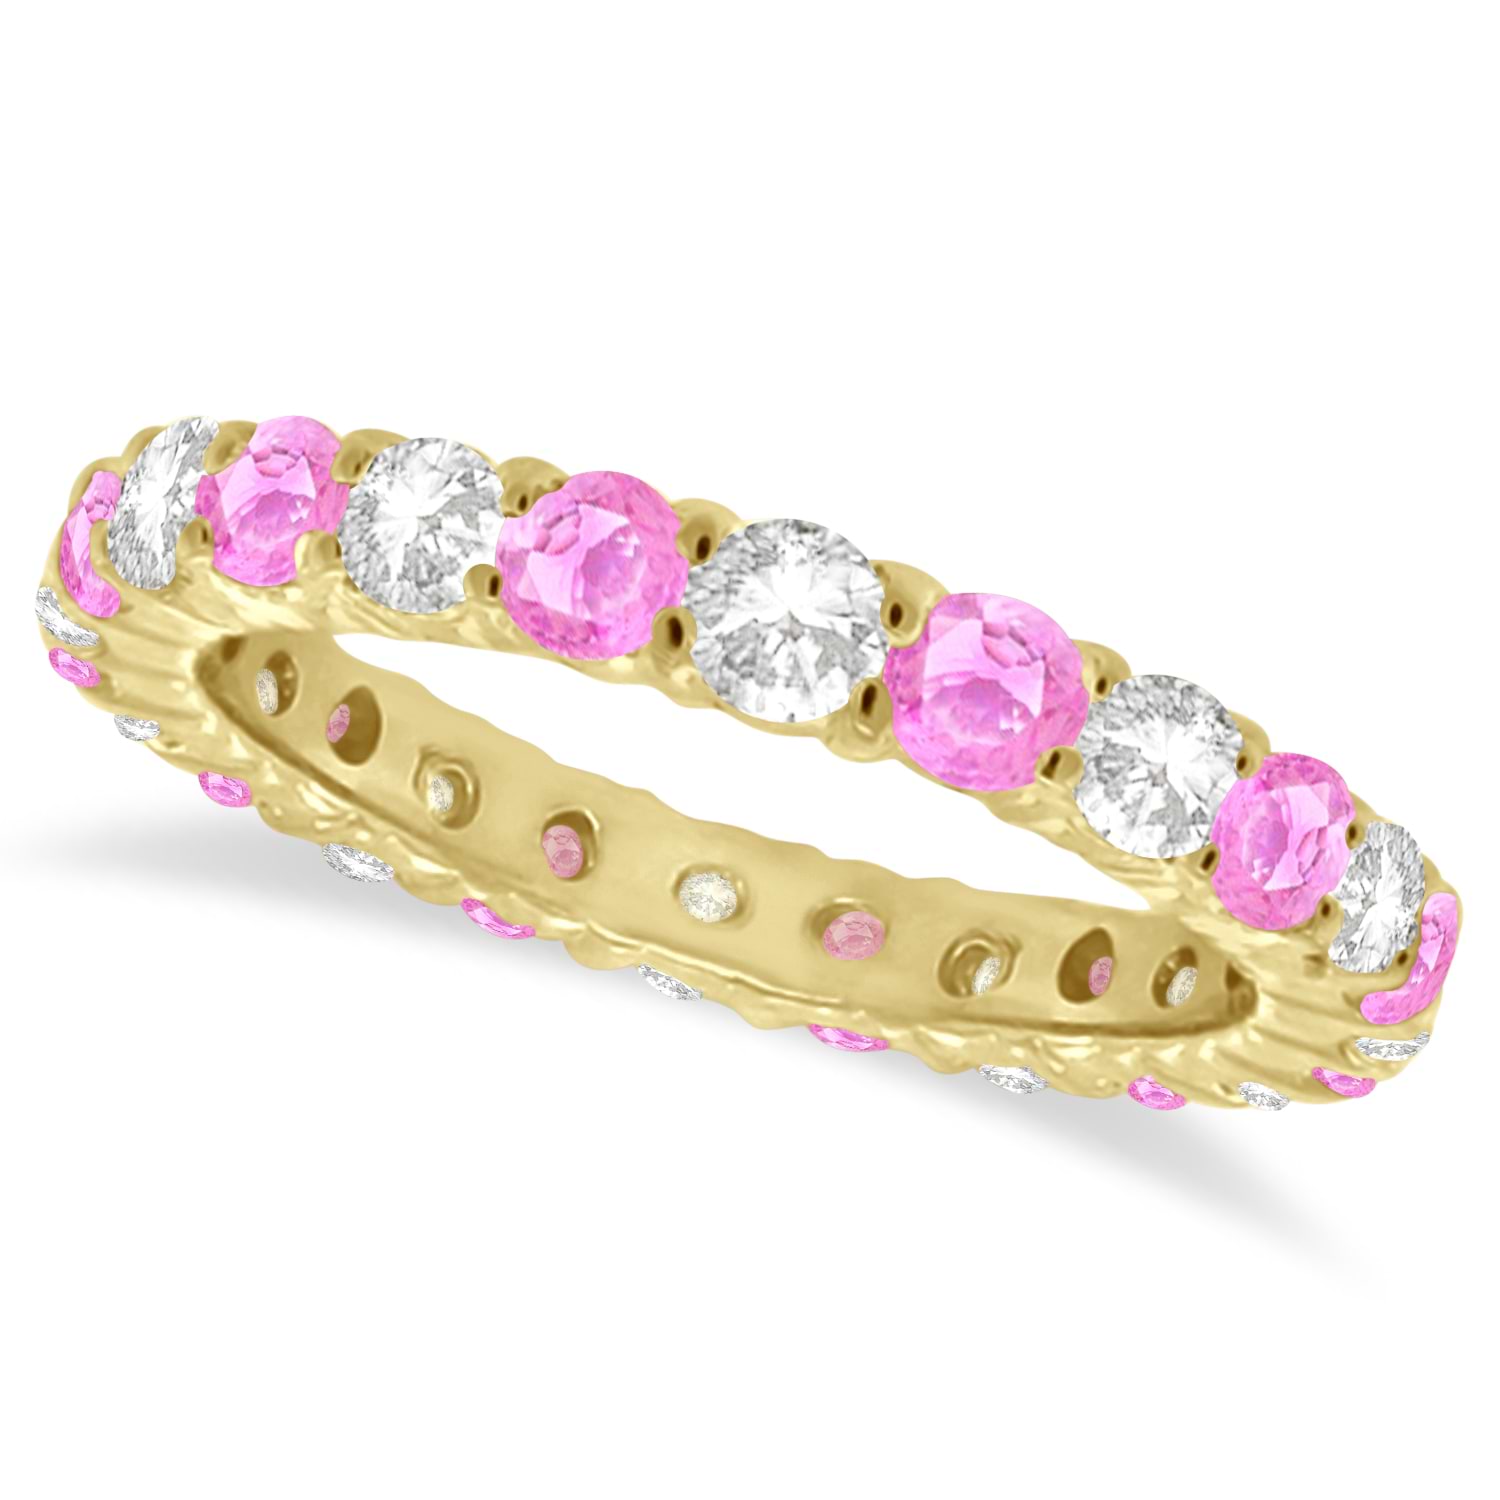 Pink Sapphire & Diamond Eternity Ring Band 14k Yellow Gold (1.07ct)